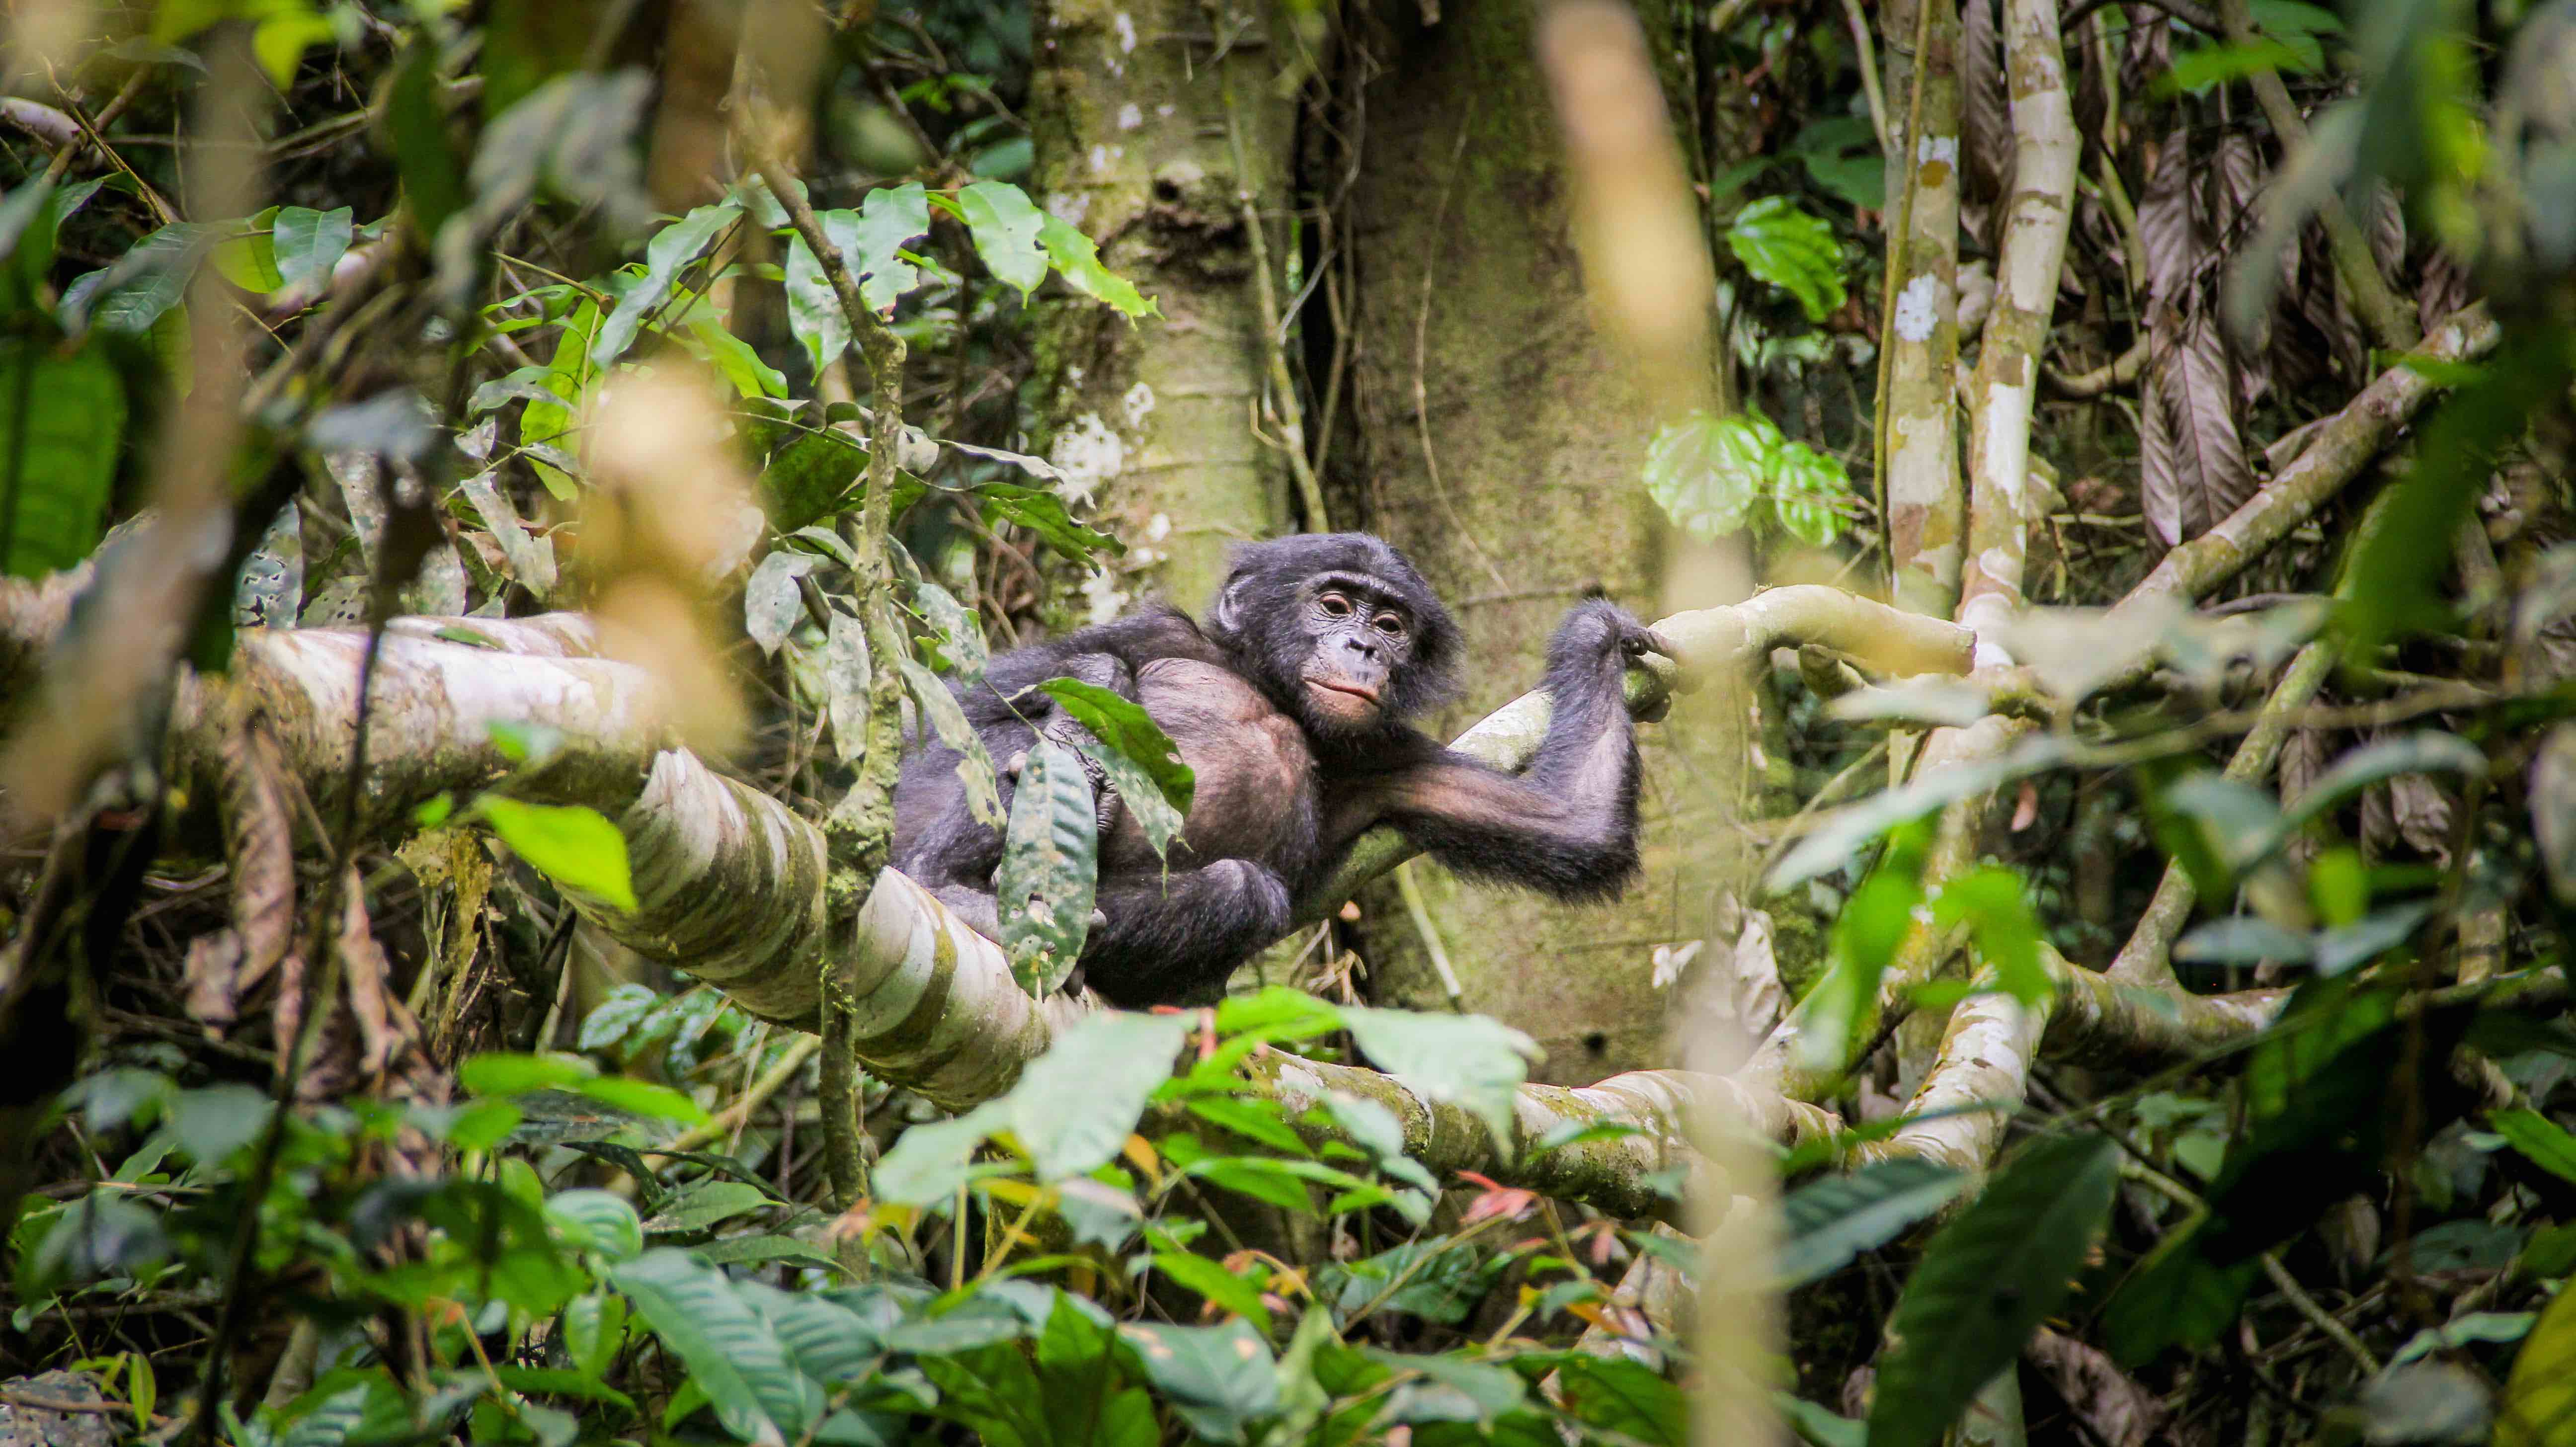 Imatge presa en la reserva salvatge Wamba forest reserve, RDC. Crèdit: Dr. Cintia Garai, Wildlife Messengers (wildlifemessengers.org) 